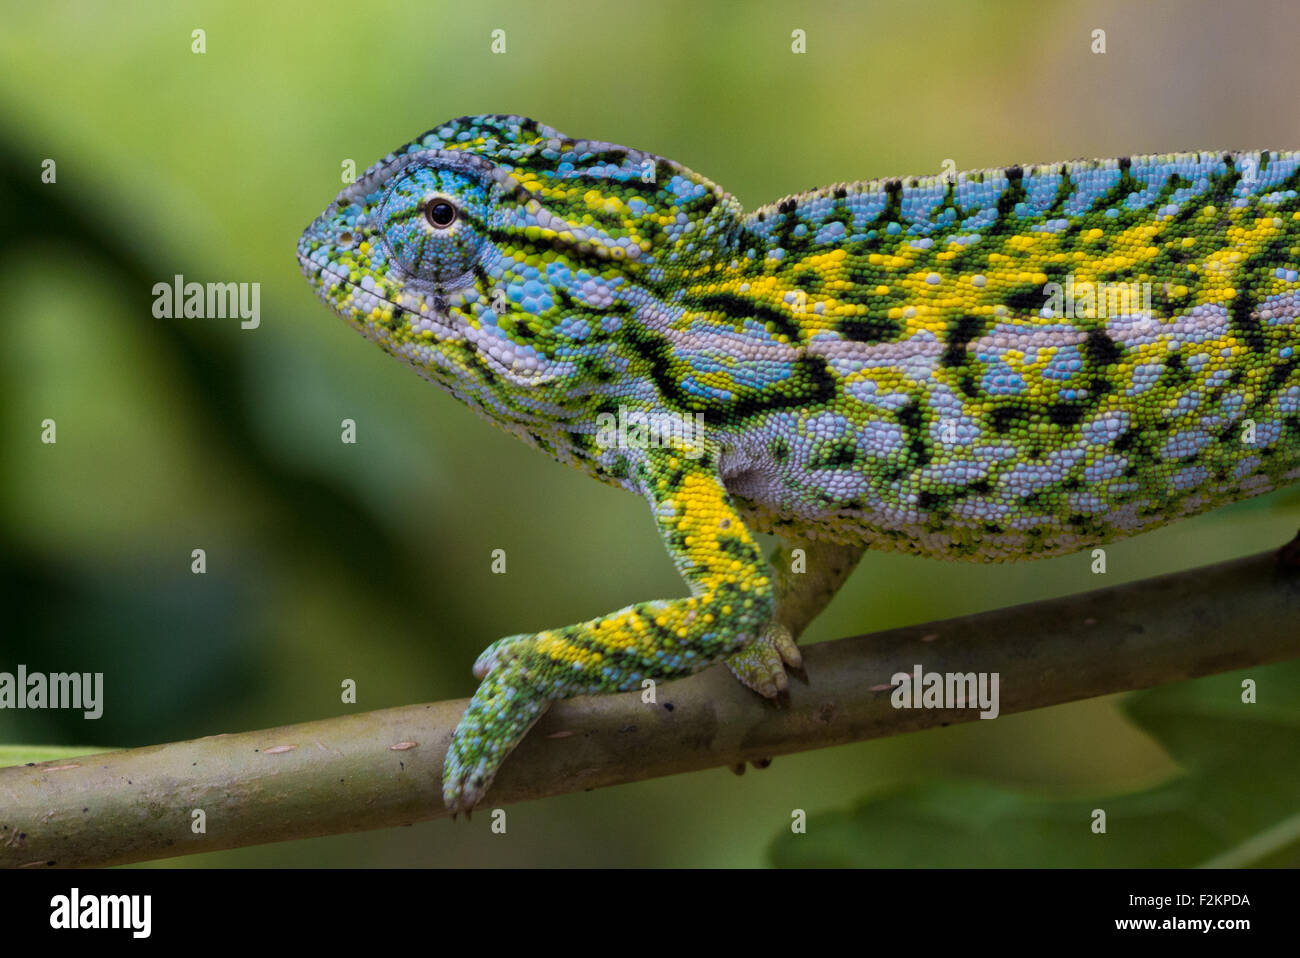 Carpet chameleon, Furcifer lateralis – Leap Habitats